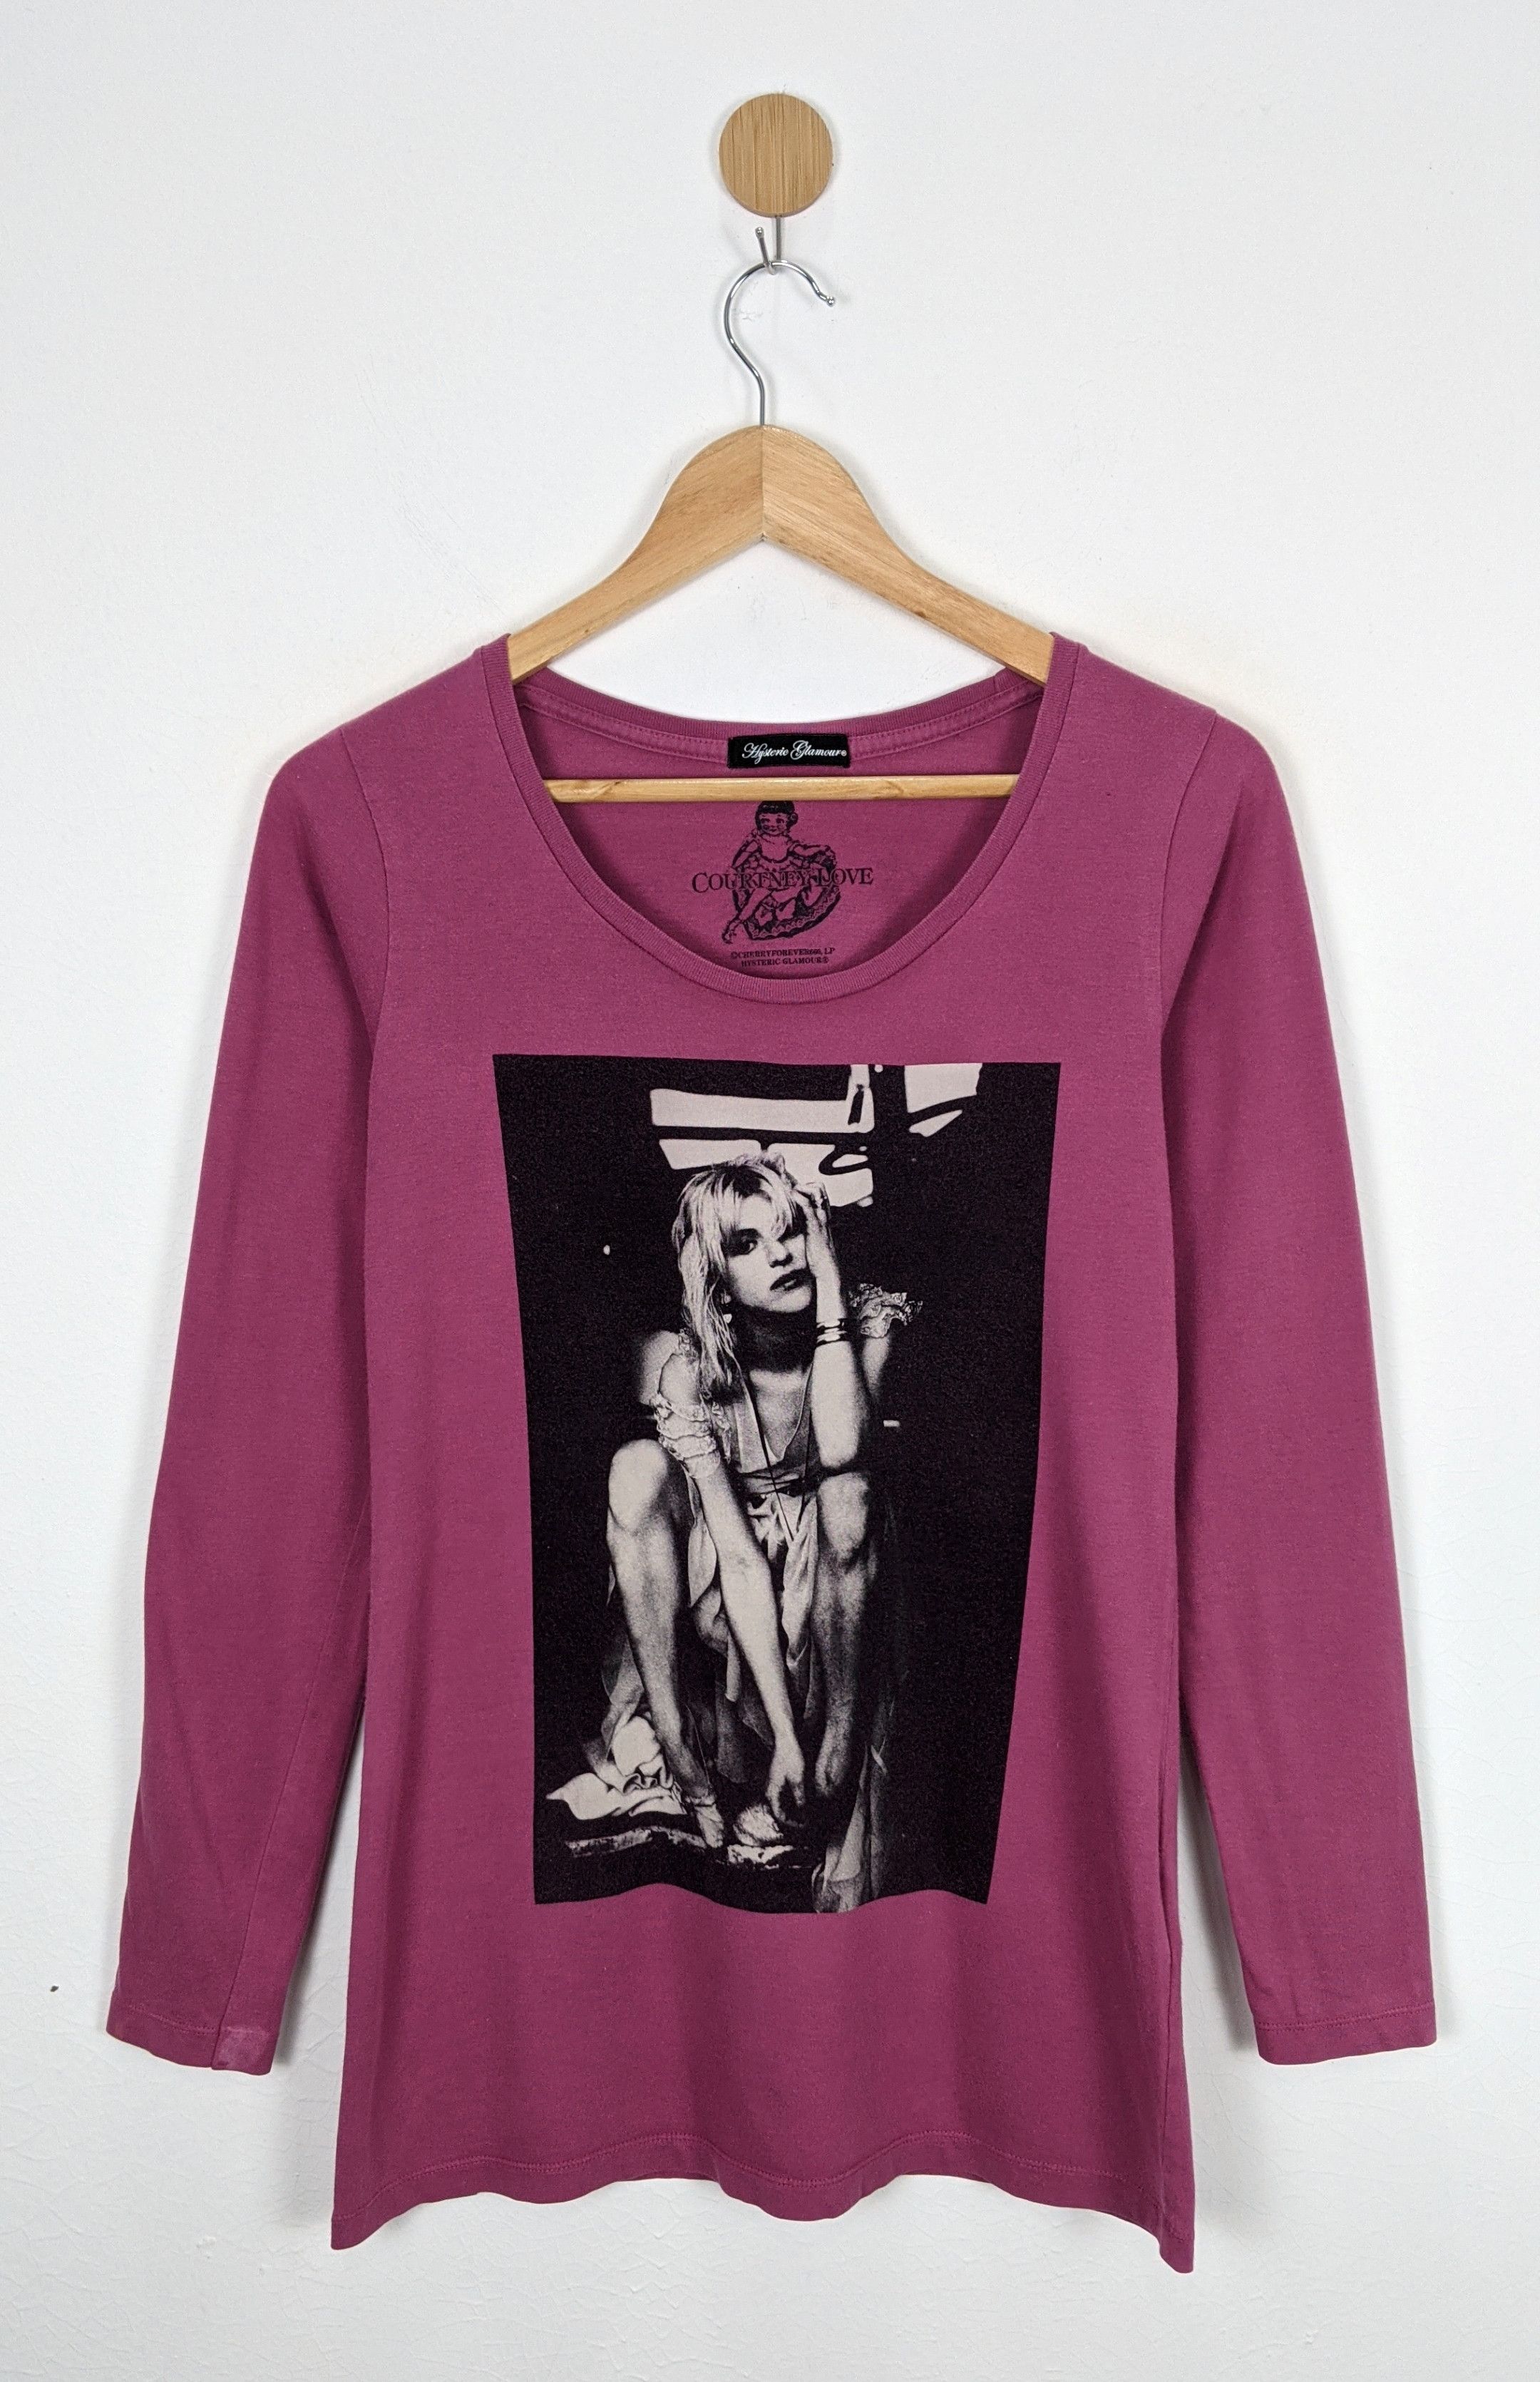 Hysteric Glamour x Courtney Love Hole shirt - 1